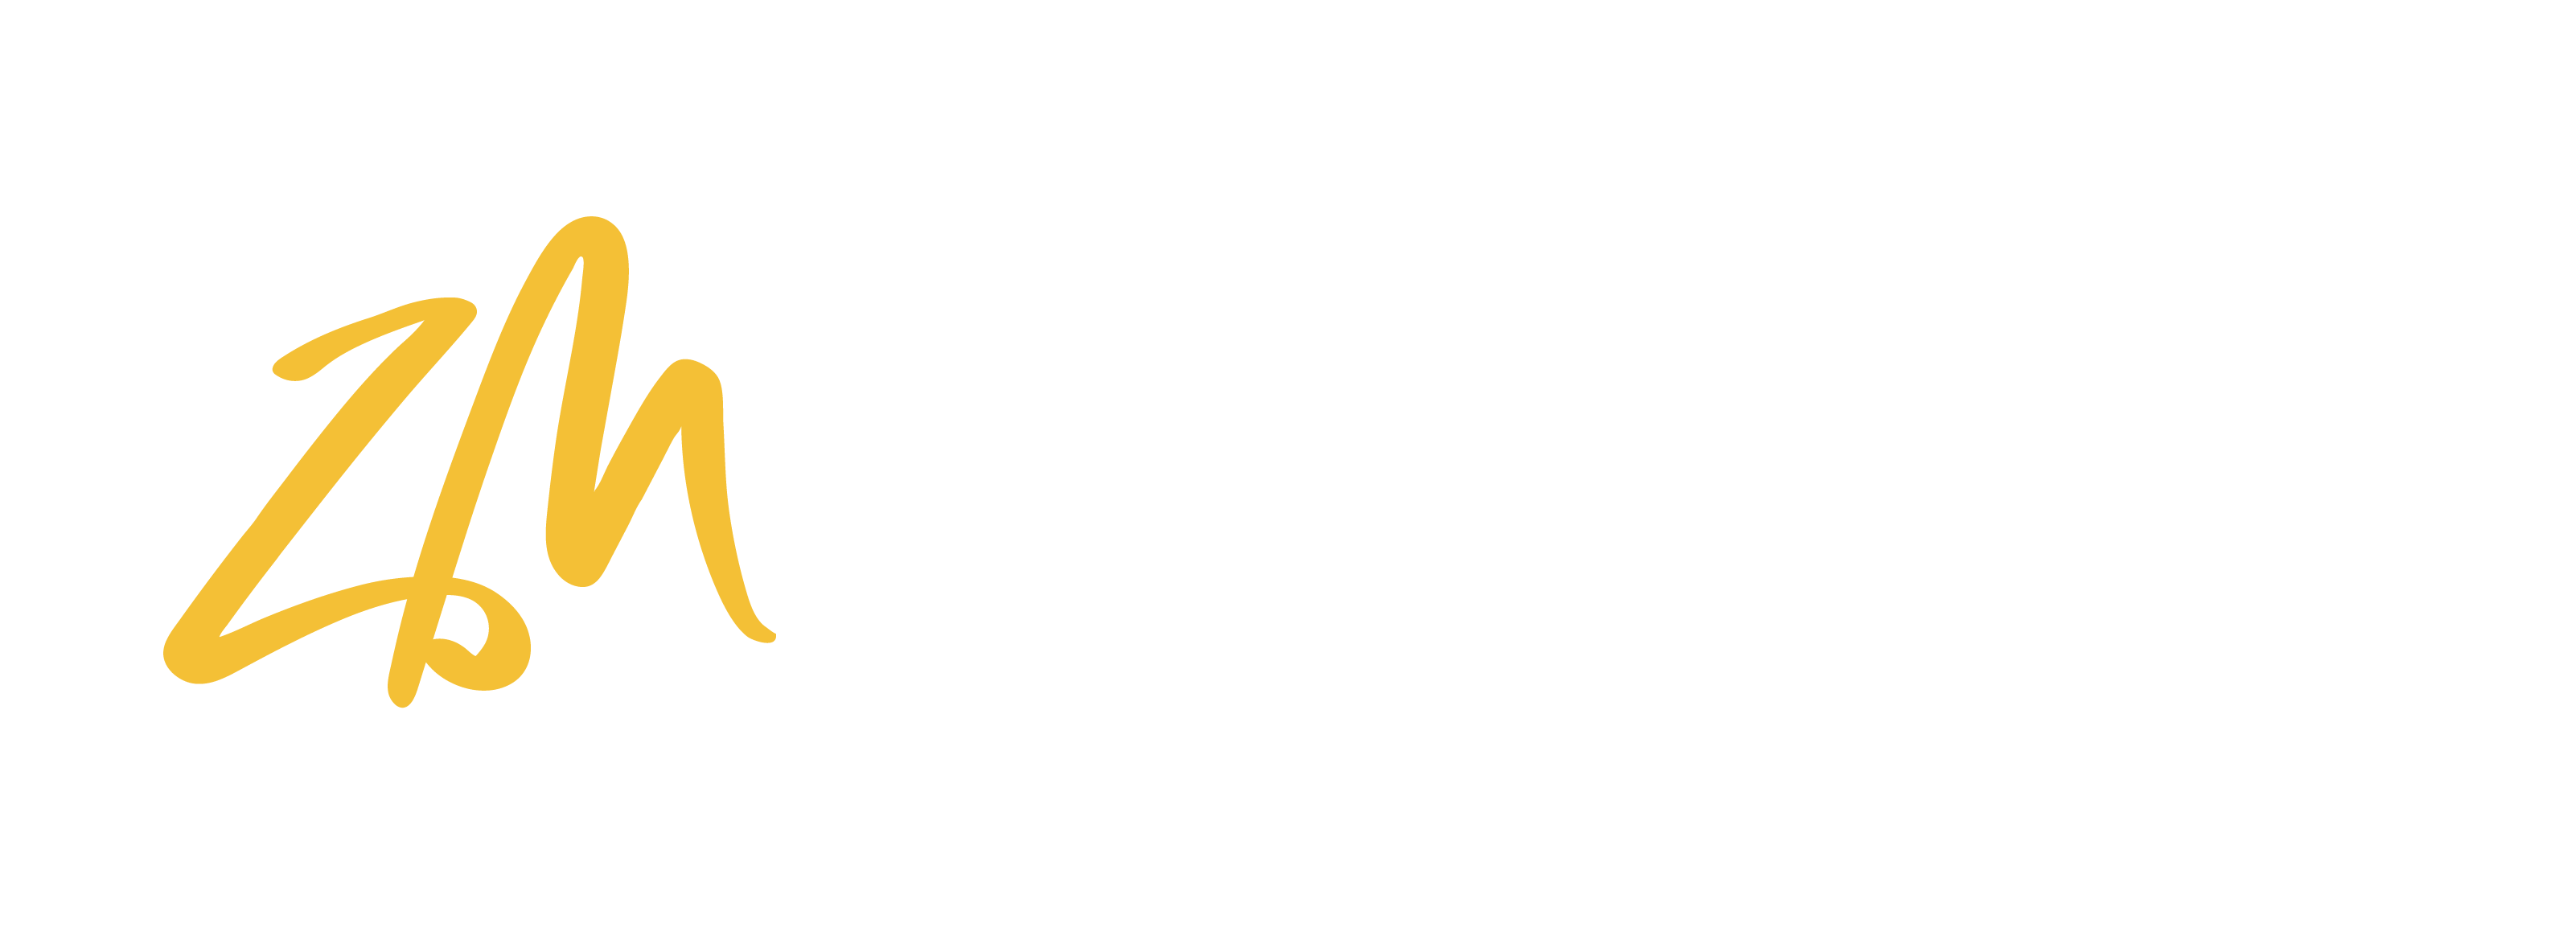 Zuko Motloung Productions